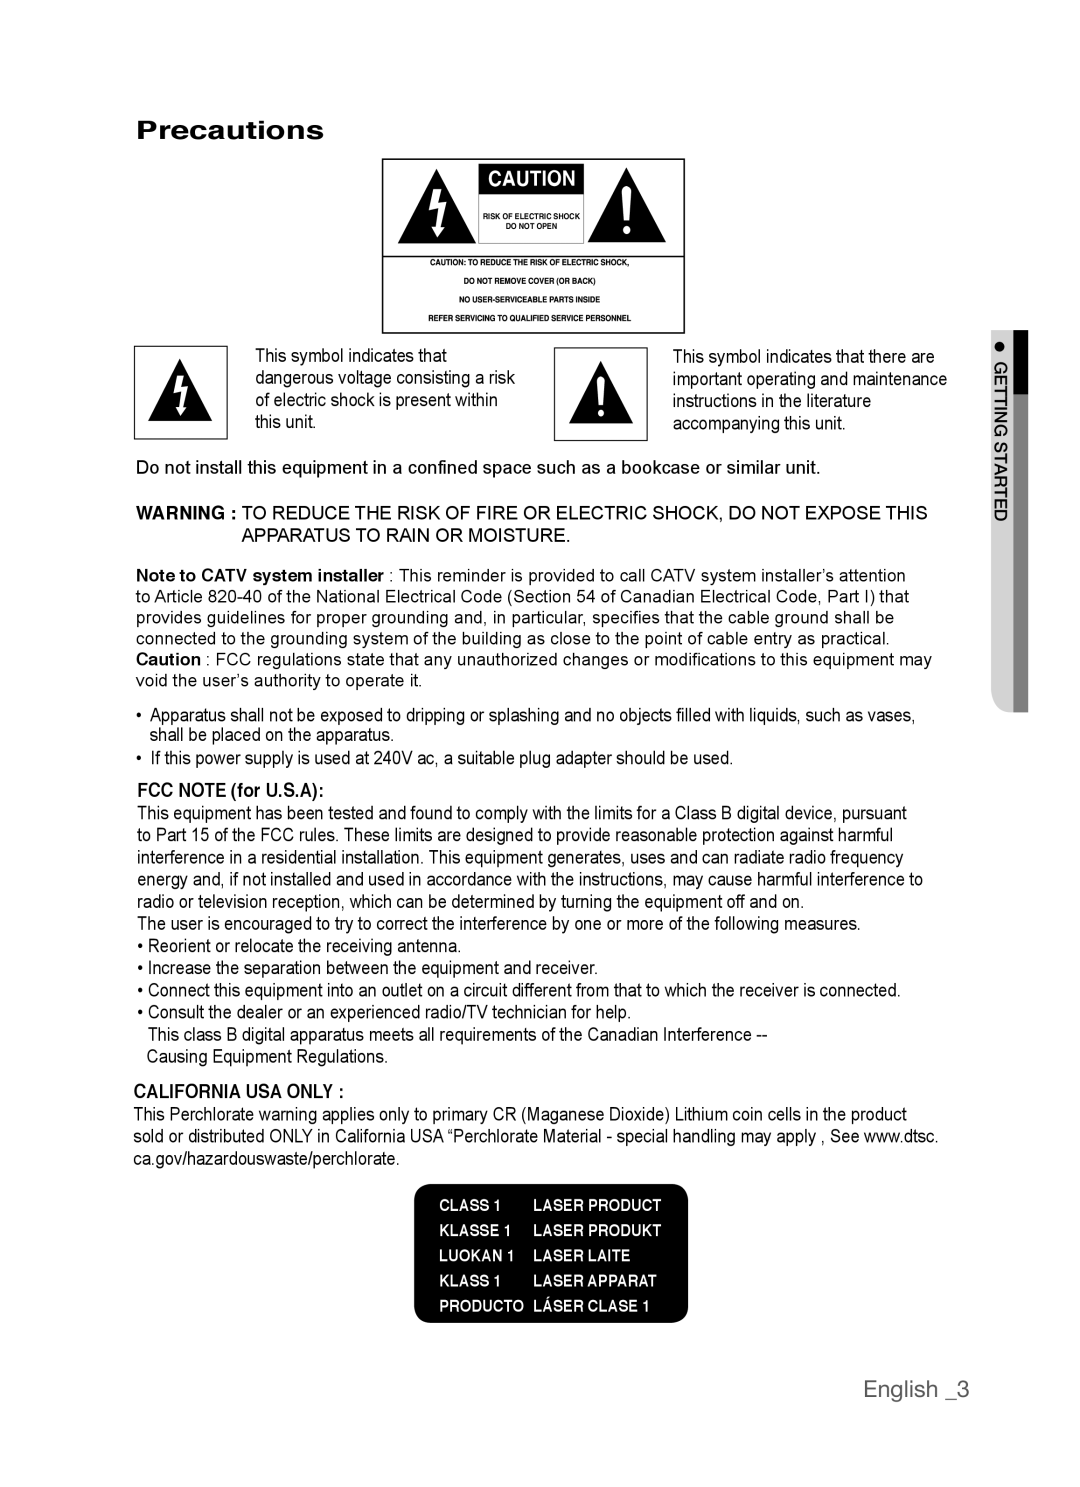 Samsung AK68-01770G, DVD-P390 user manual Precautions, English, FCC NOTE for U.S.A, California Usa Only 